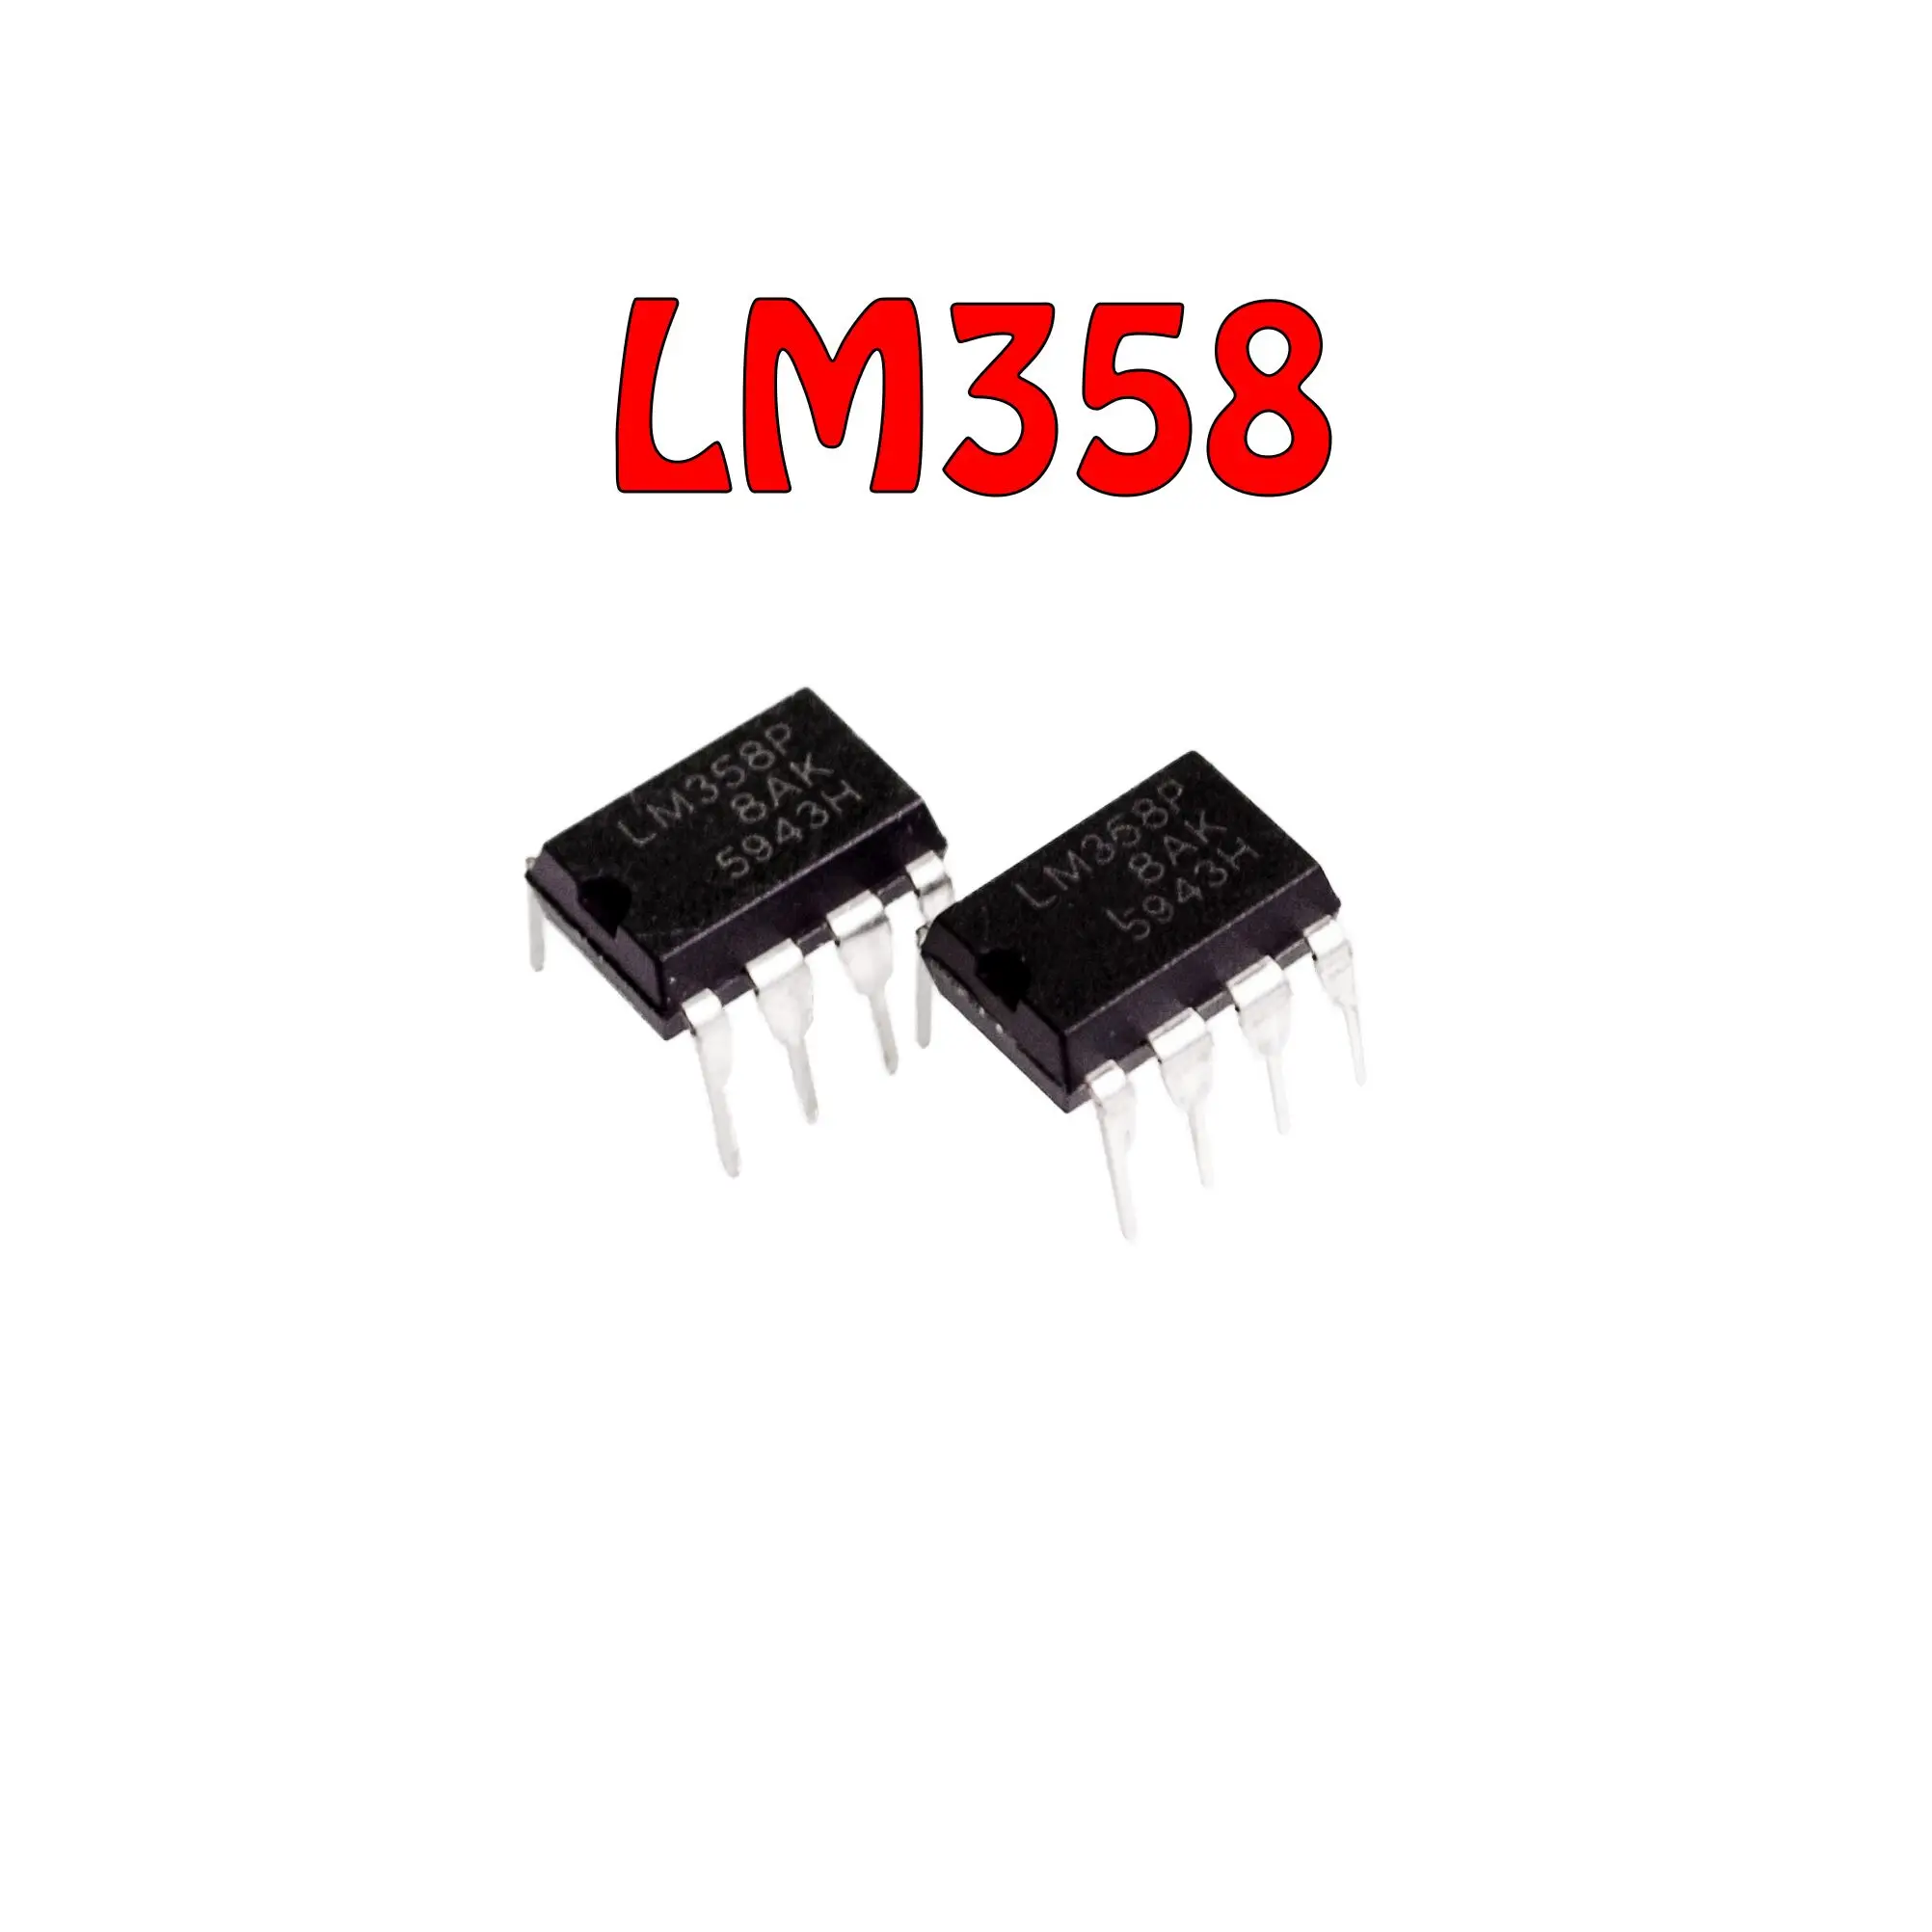 

10pcs/lot electronics ICs chips LM358N lm358 358 Linear Instrumentation Buffer Operational Amplifier 1.1MHZ DIP8